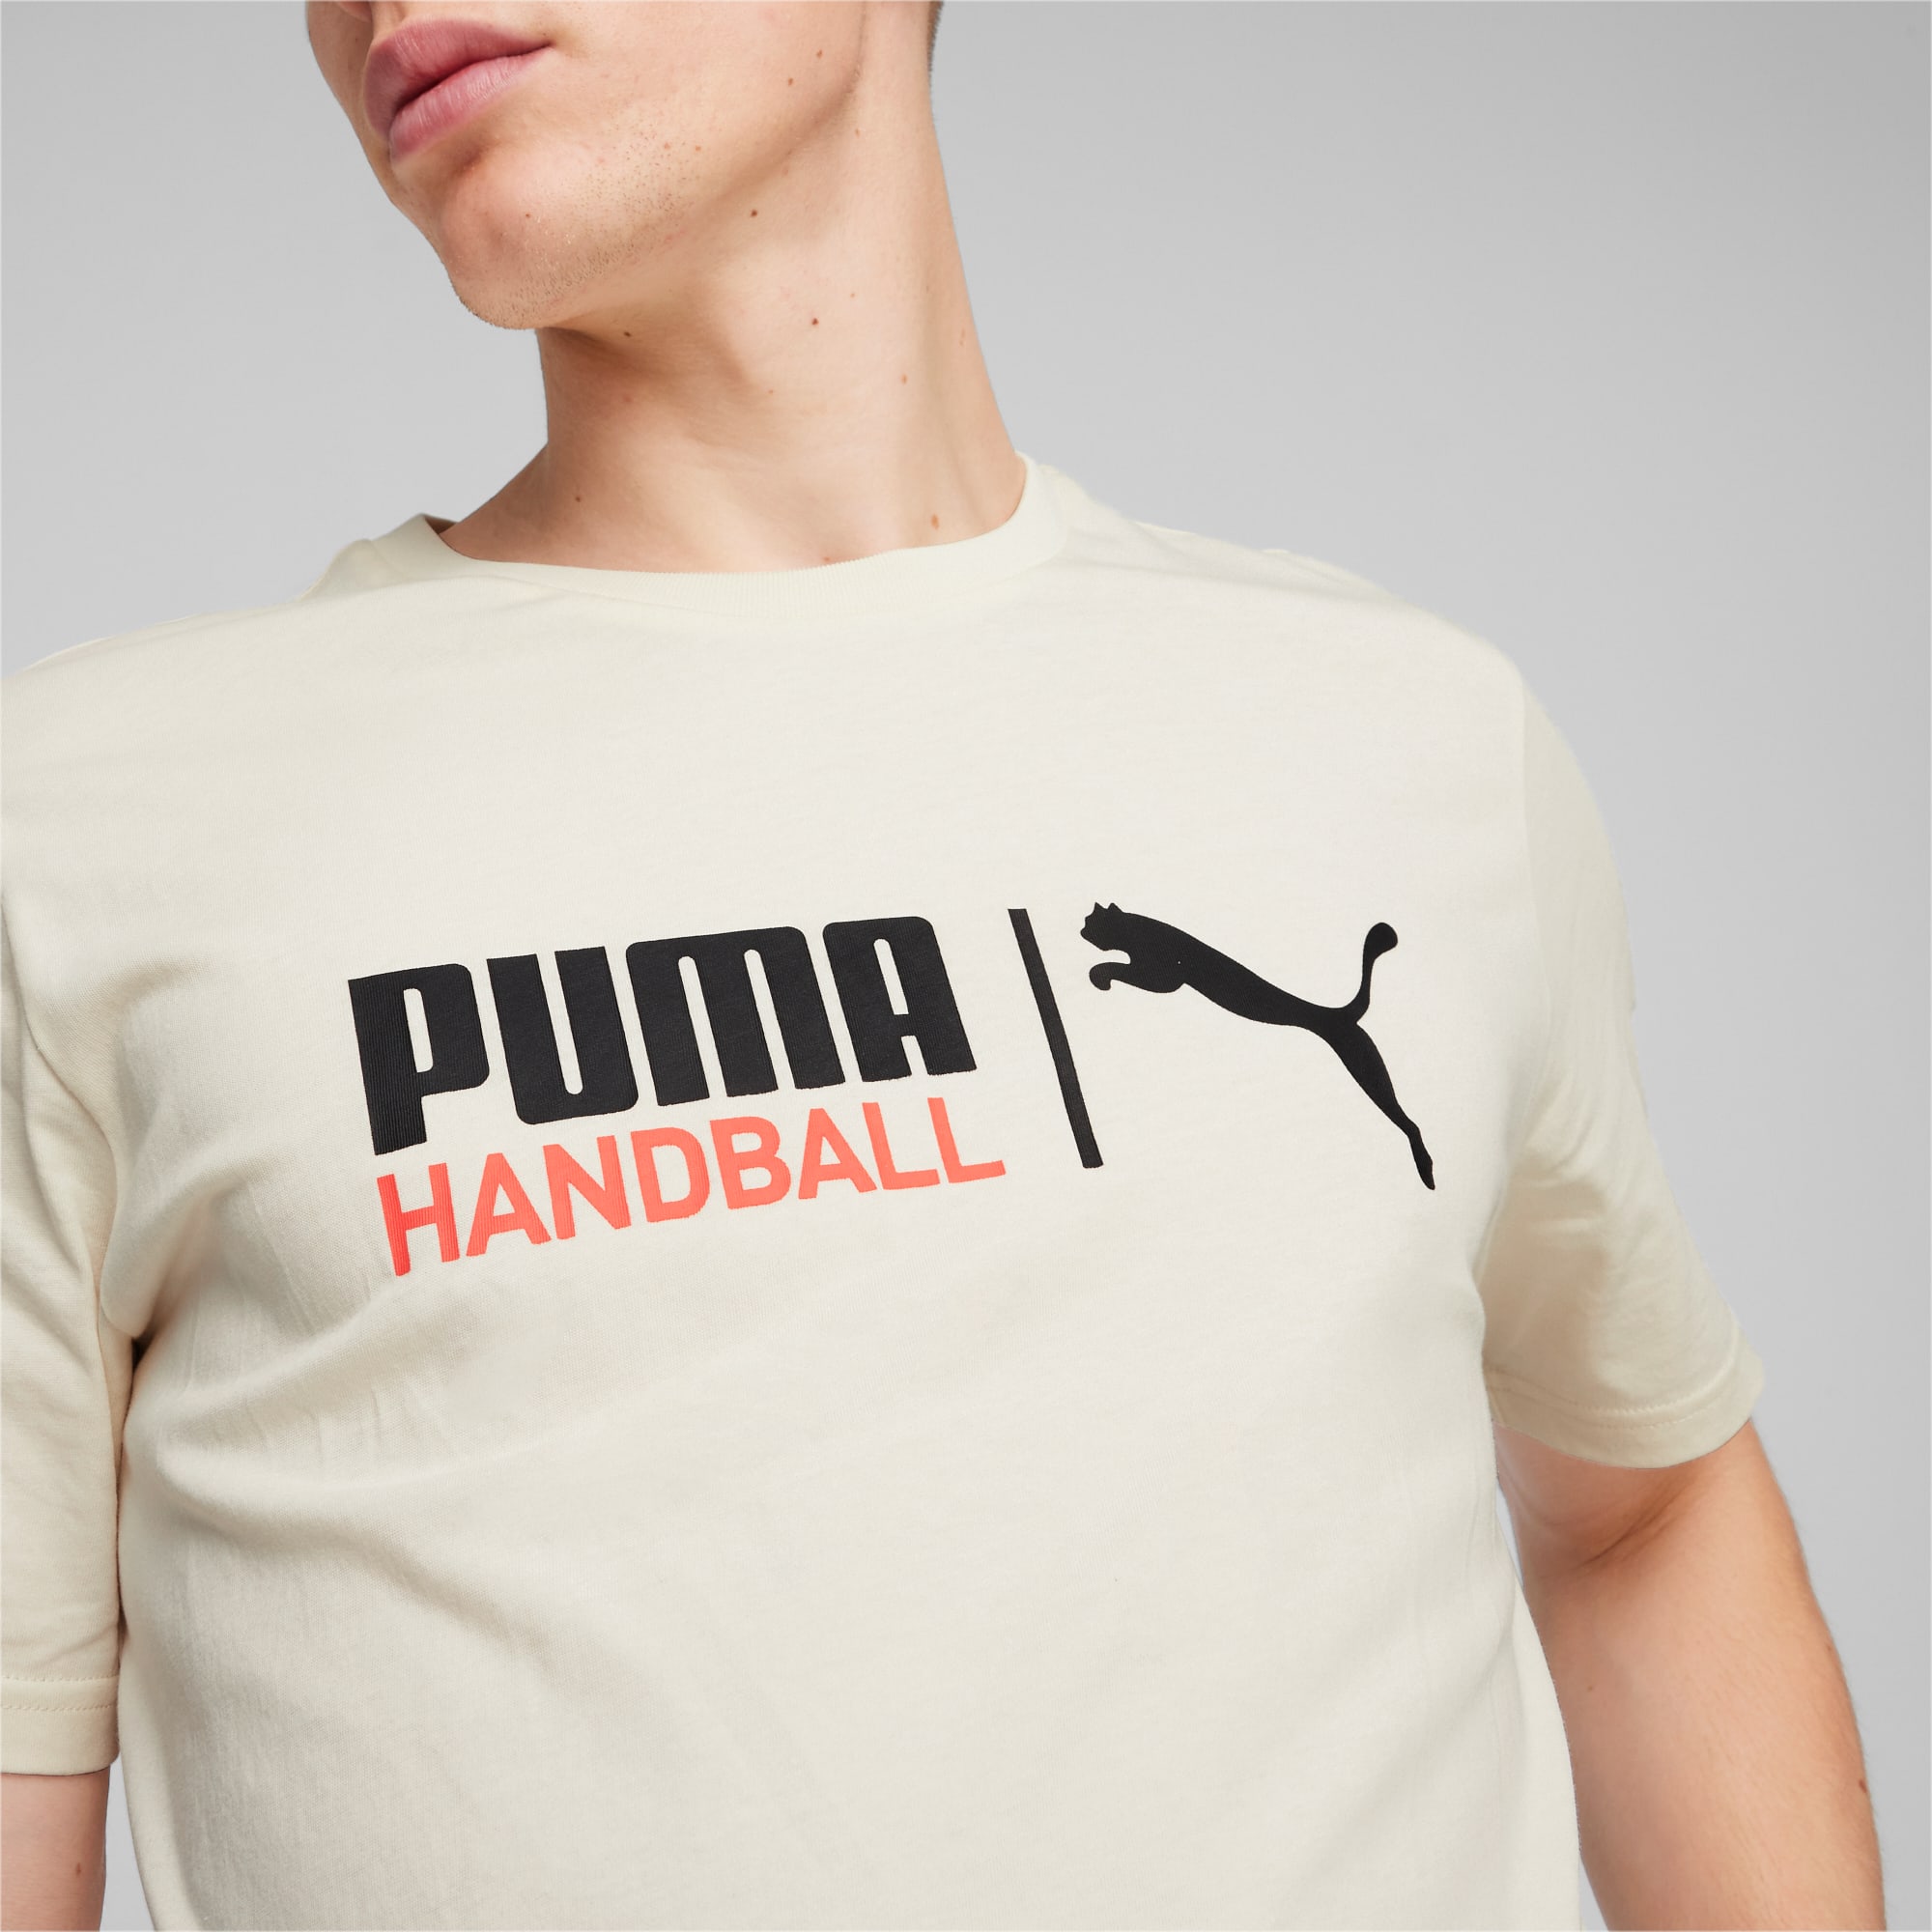 PUMA Handball T-Shirt Men, Sugared Almond/Black